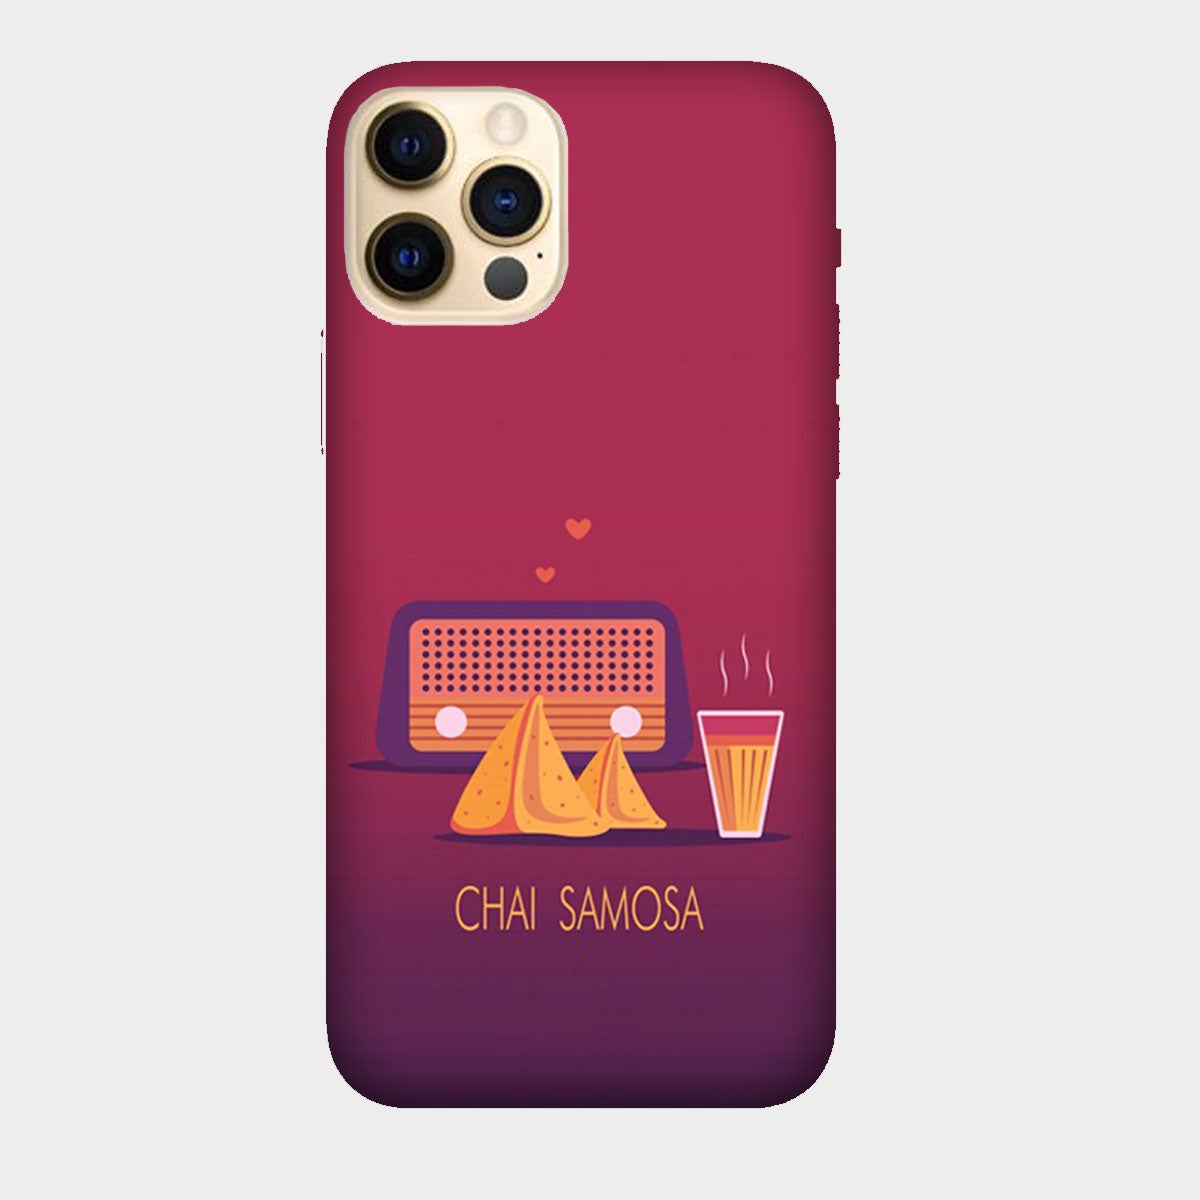 Chai Samosa - Mobile Phone Cover - Hard Case